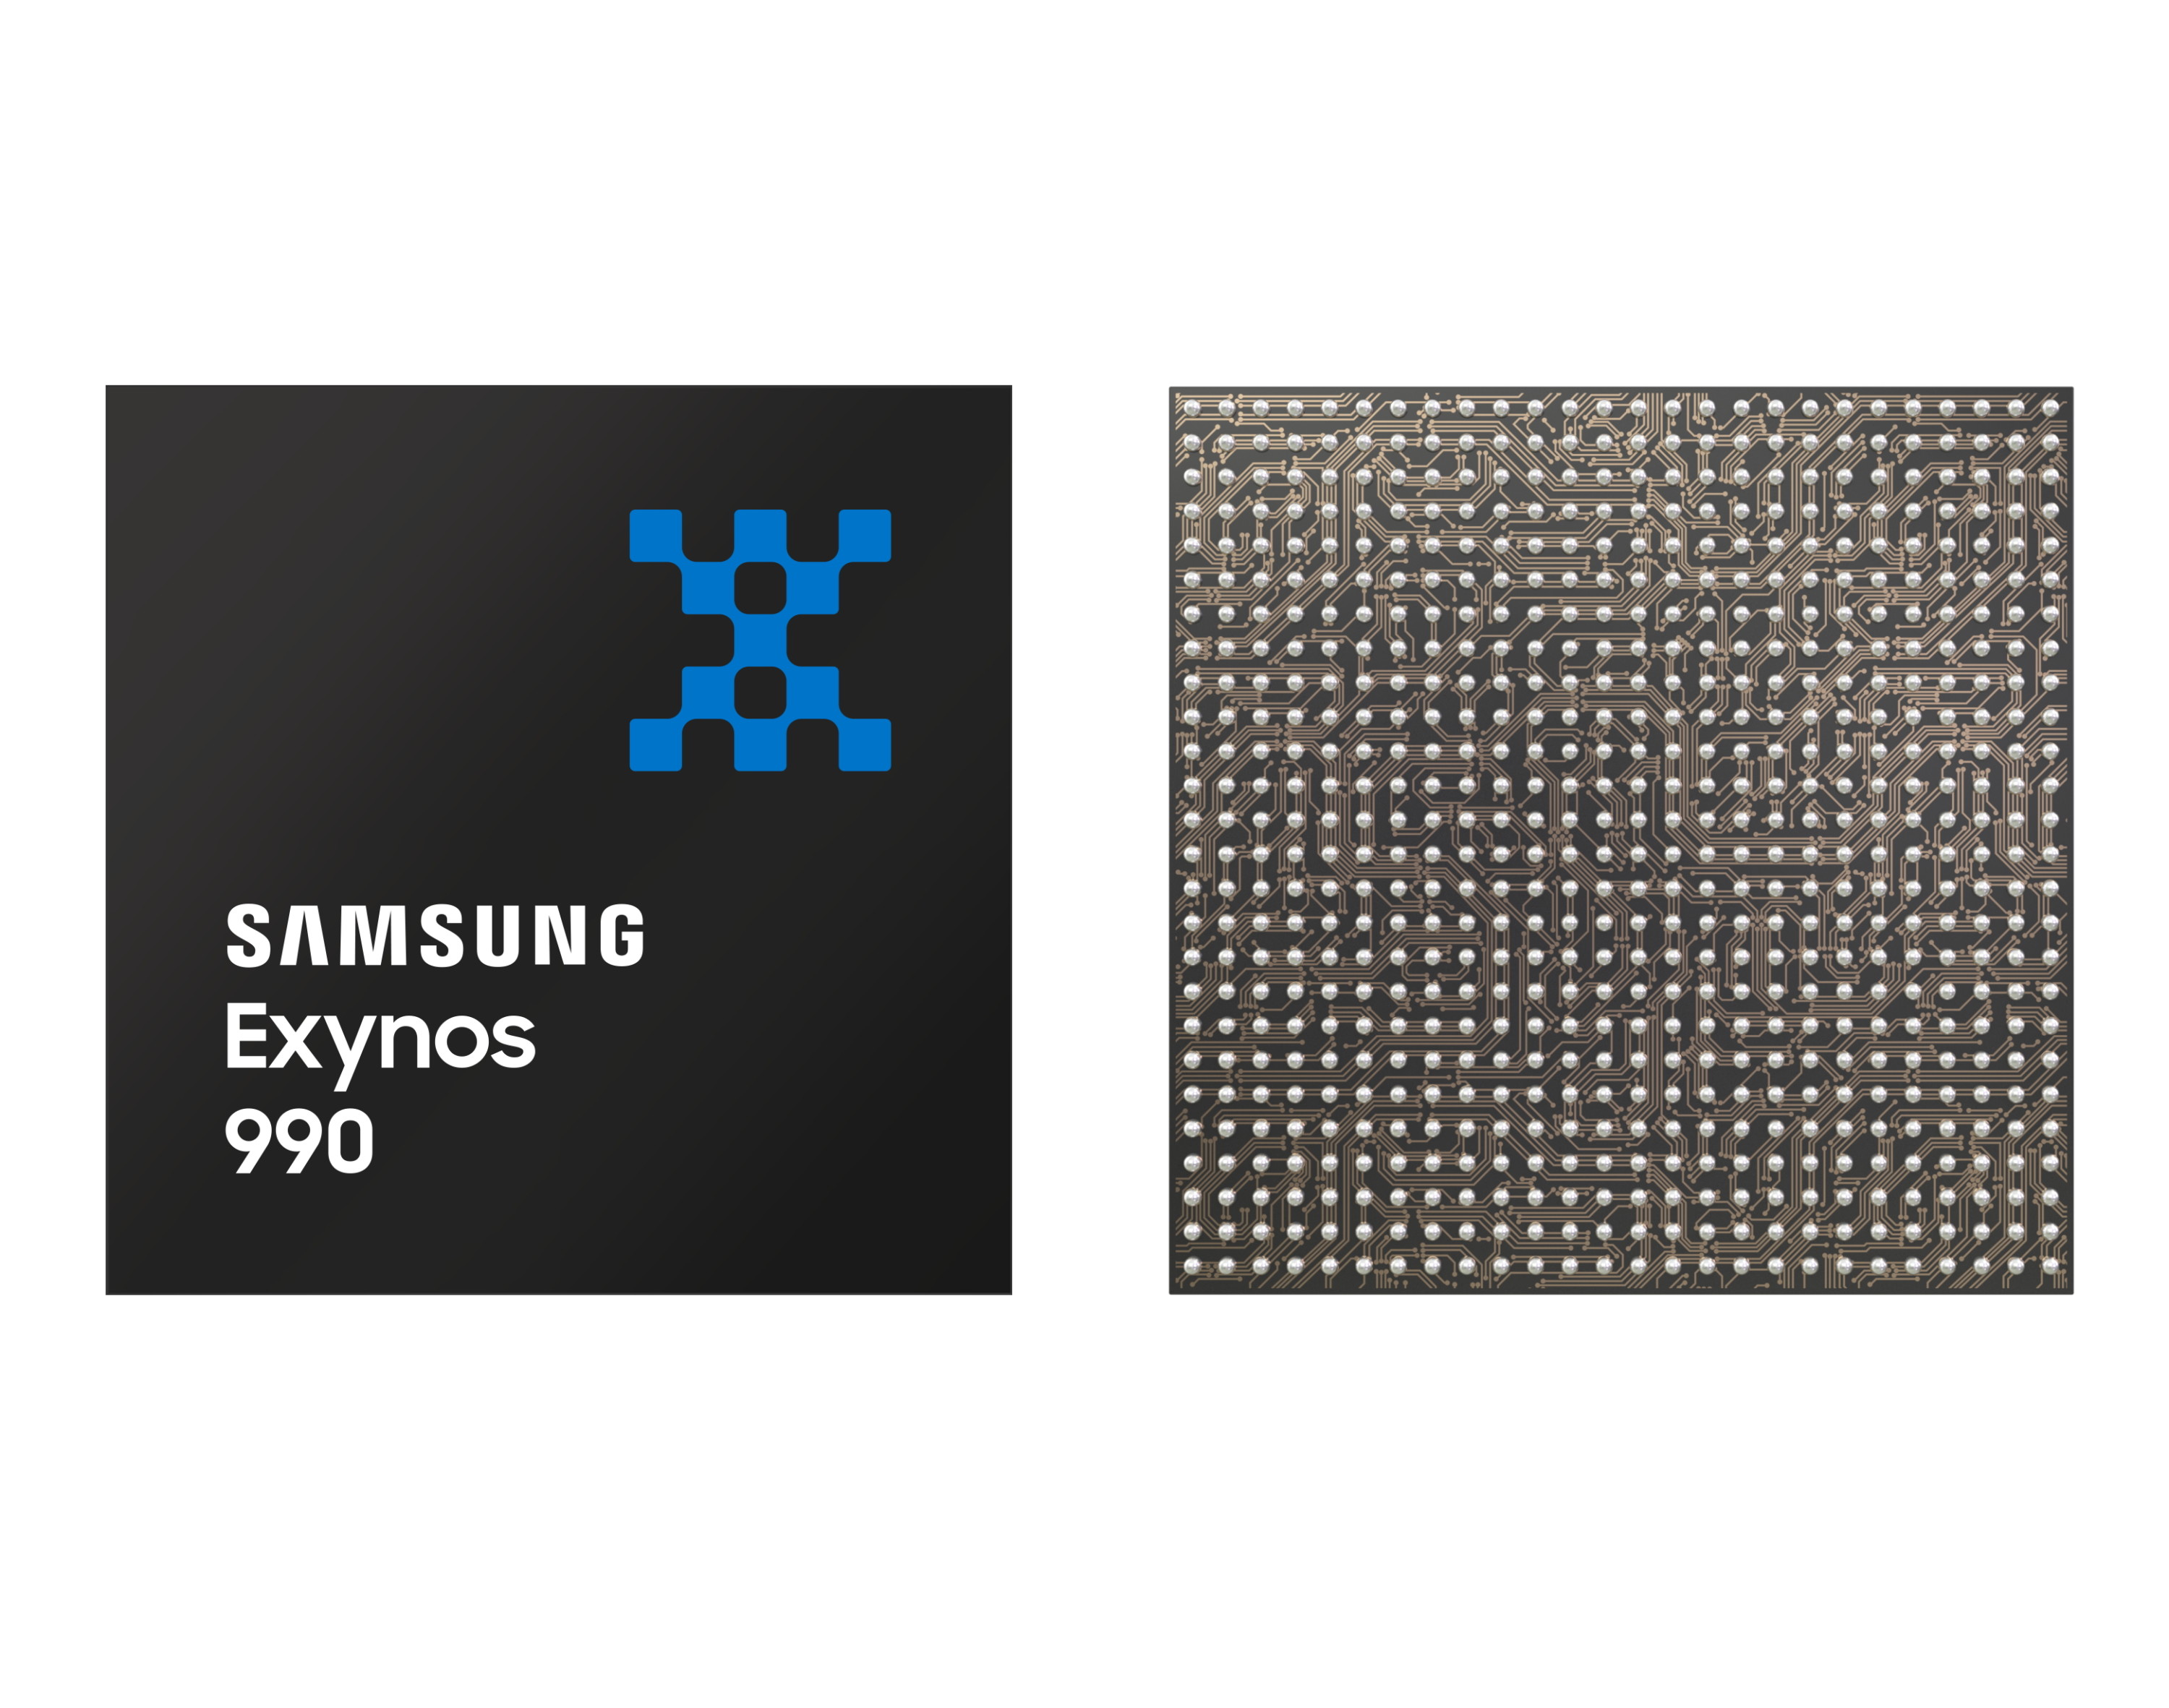 Samsung представила флагманскую SoC Exynos 990 для Galaxy S11 (7 нм EUV, восьмиядерный CPU с модифицированными ядрами и GPU Mali-G77) и модем 5G Exynos Modem 5123